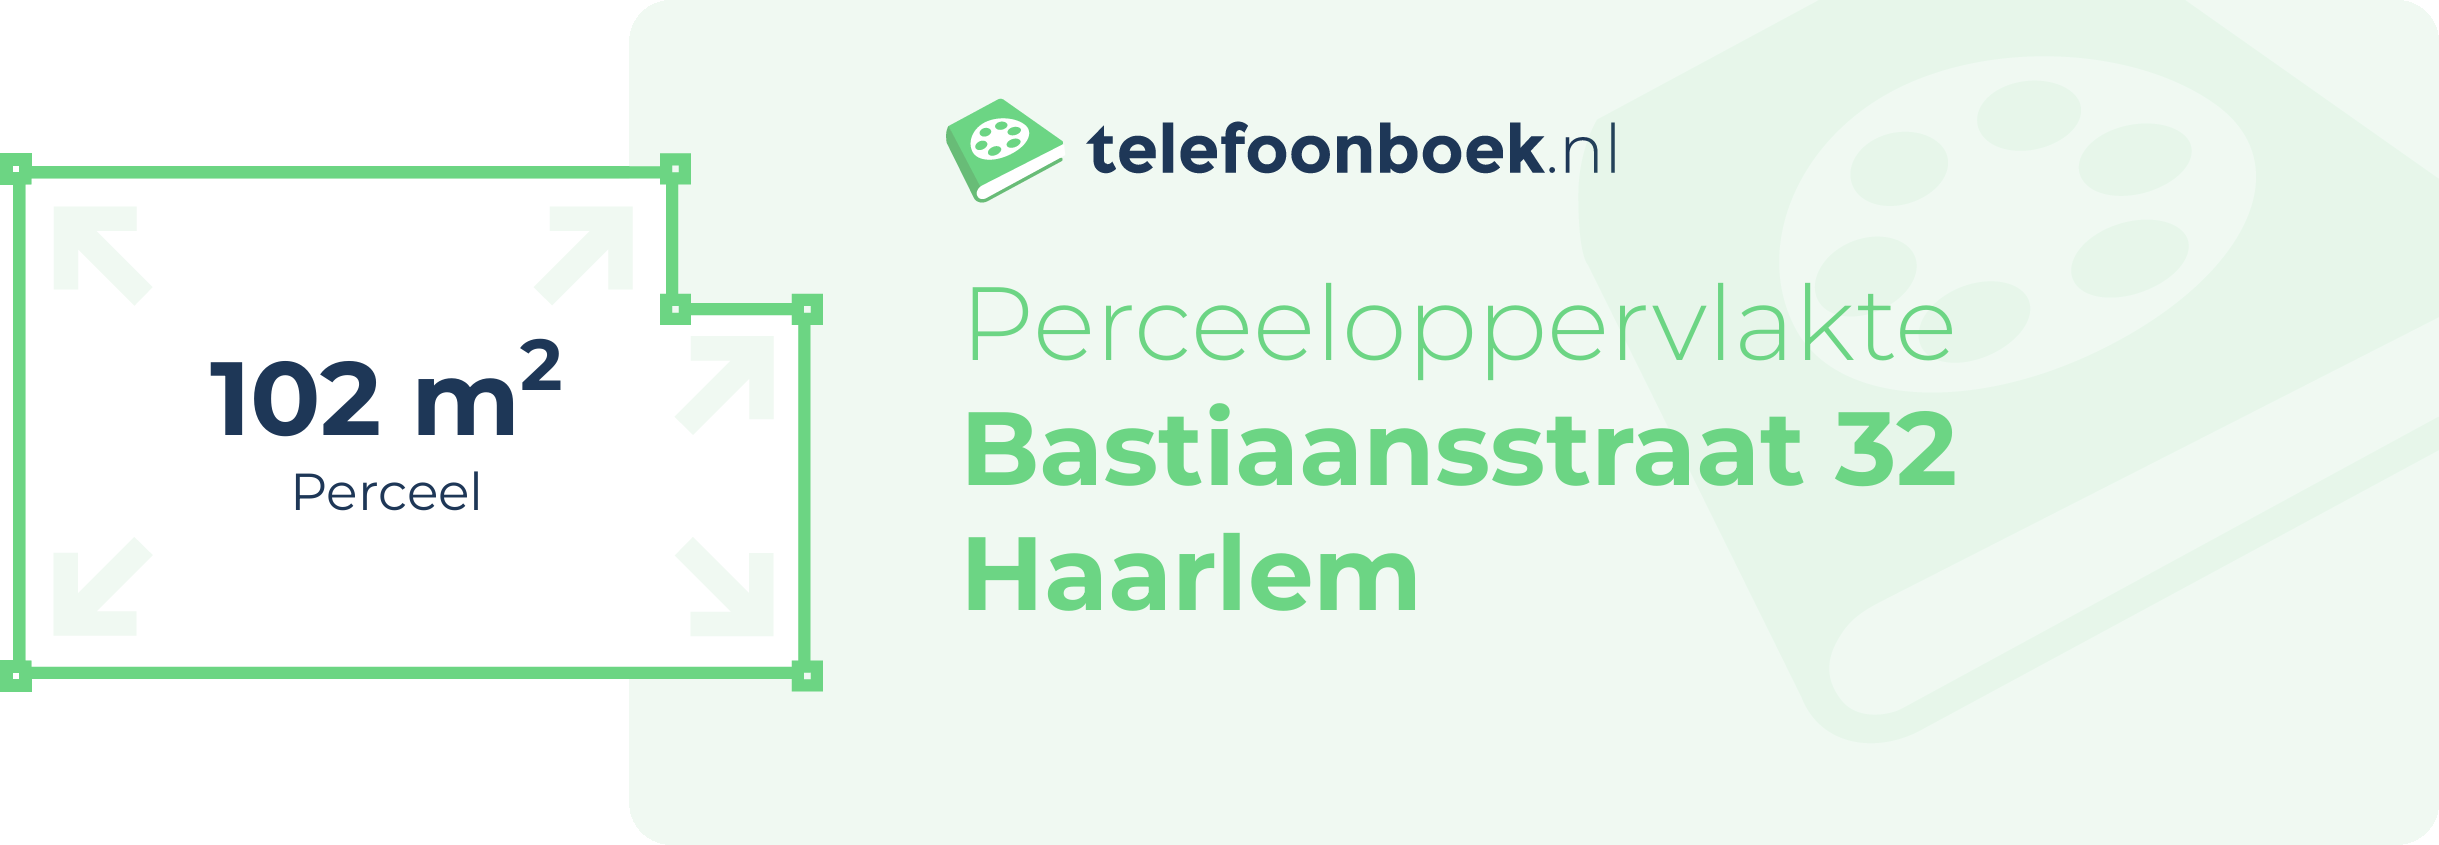 Perceeloppervlakte Bastiaansstraat 32 Haarlem